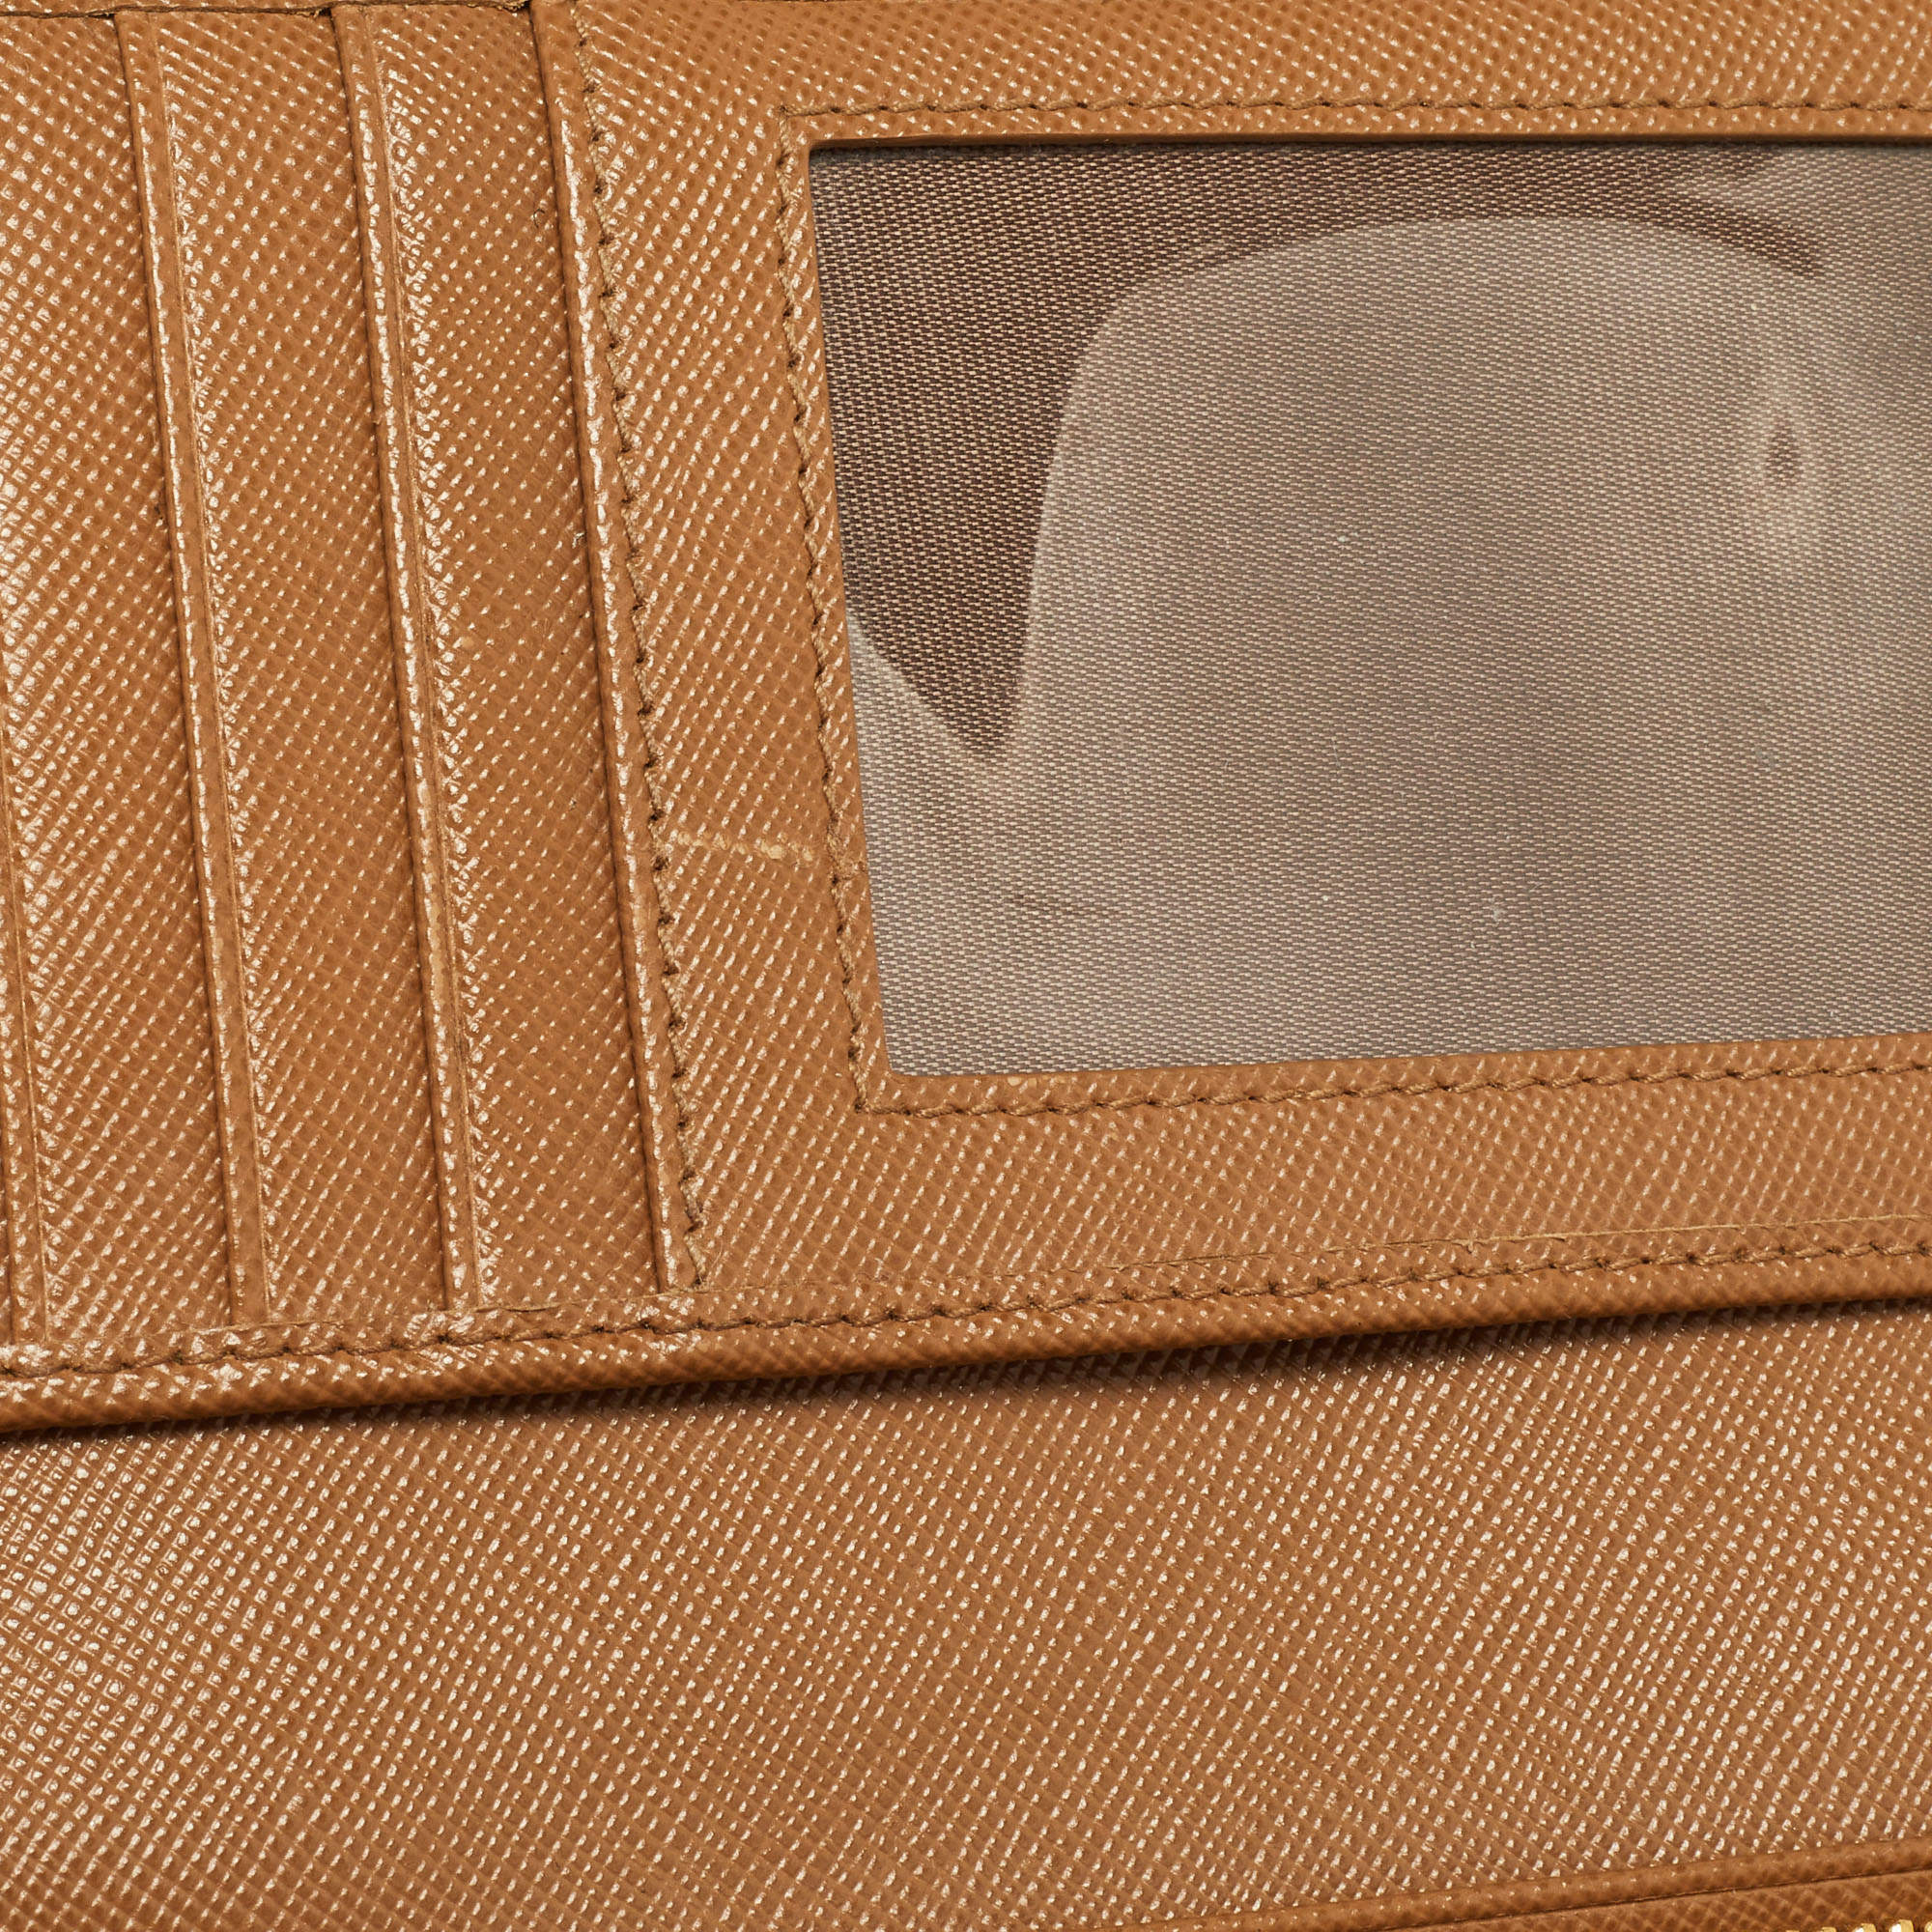 PRELOVED) Original Bonia Handbag/Tote bag, Luxury, Bags & Wallets